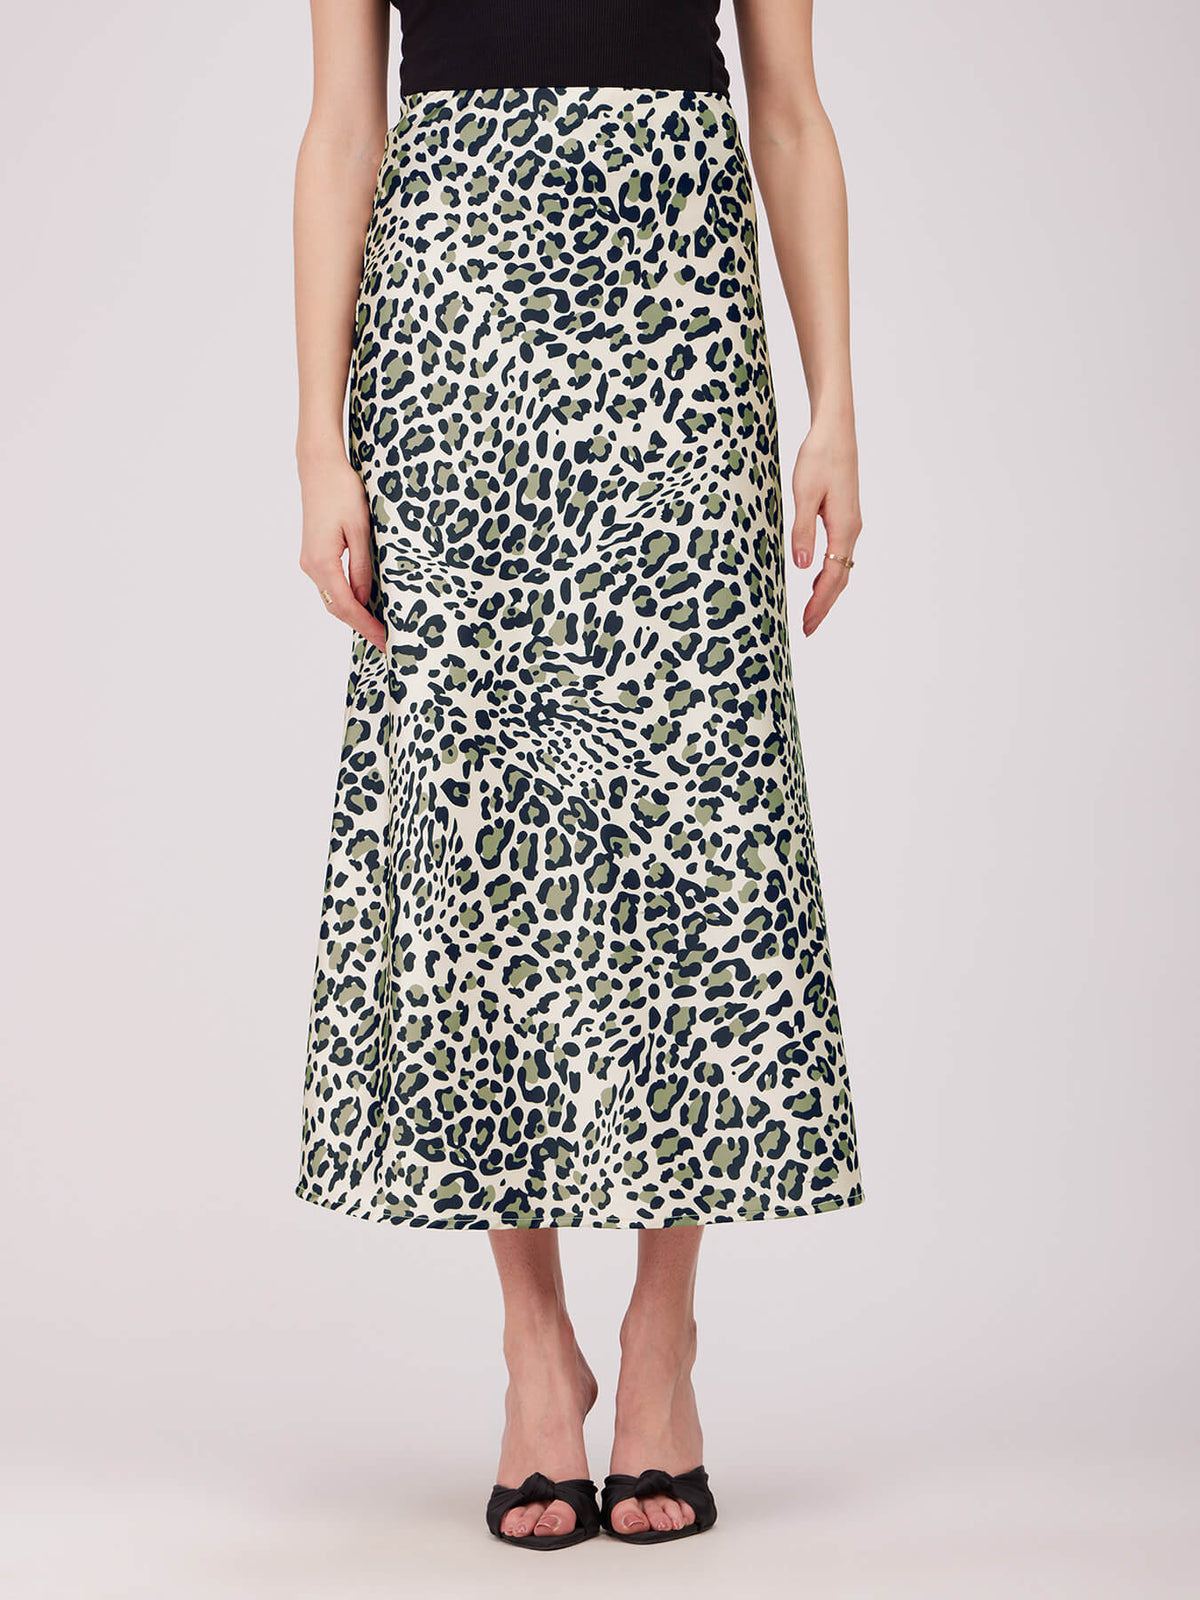 Stretch Satin Animal Print Skirt - Beige And Olive